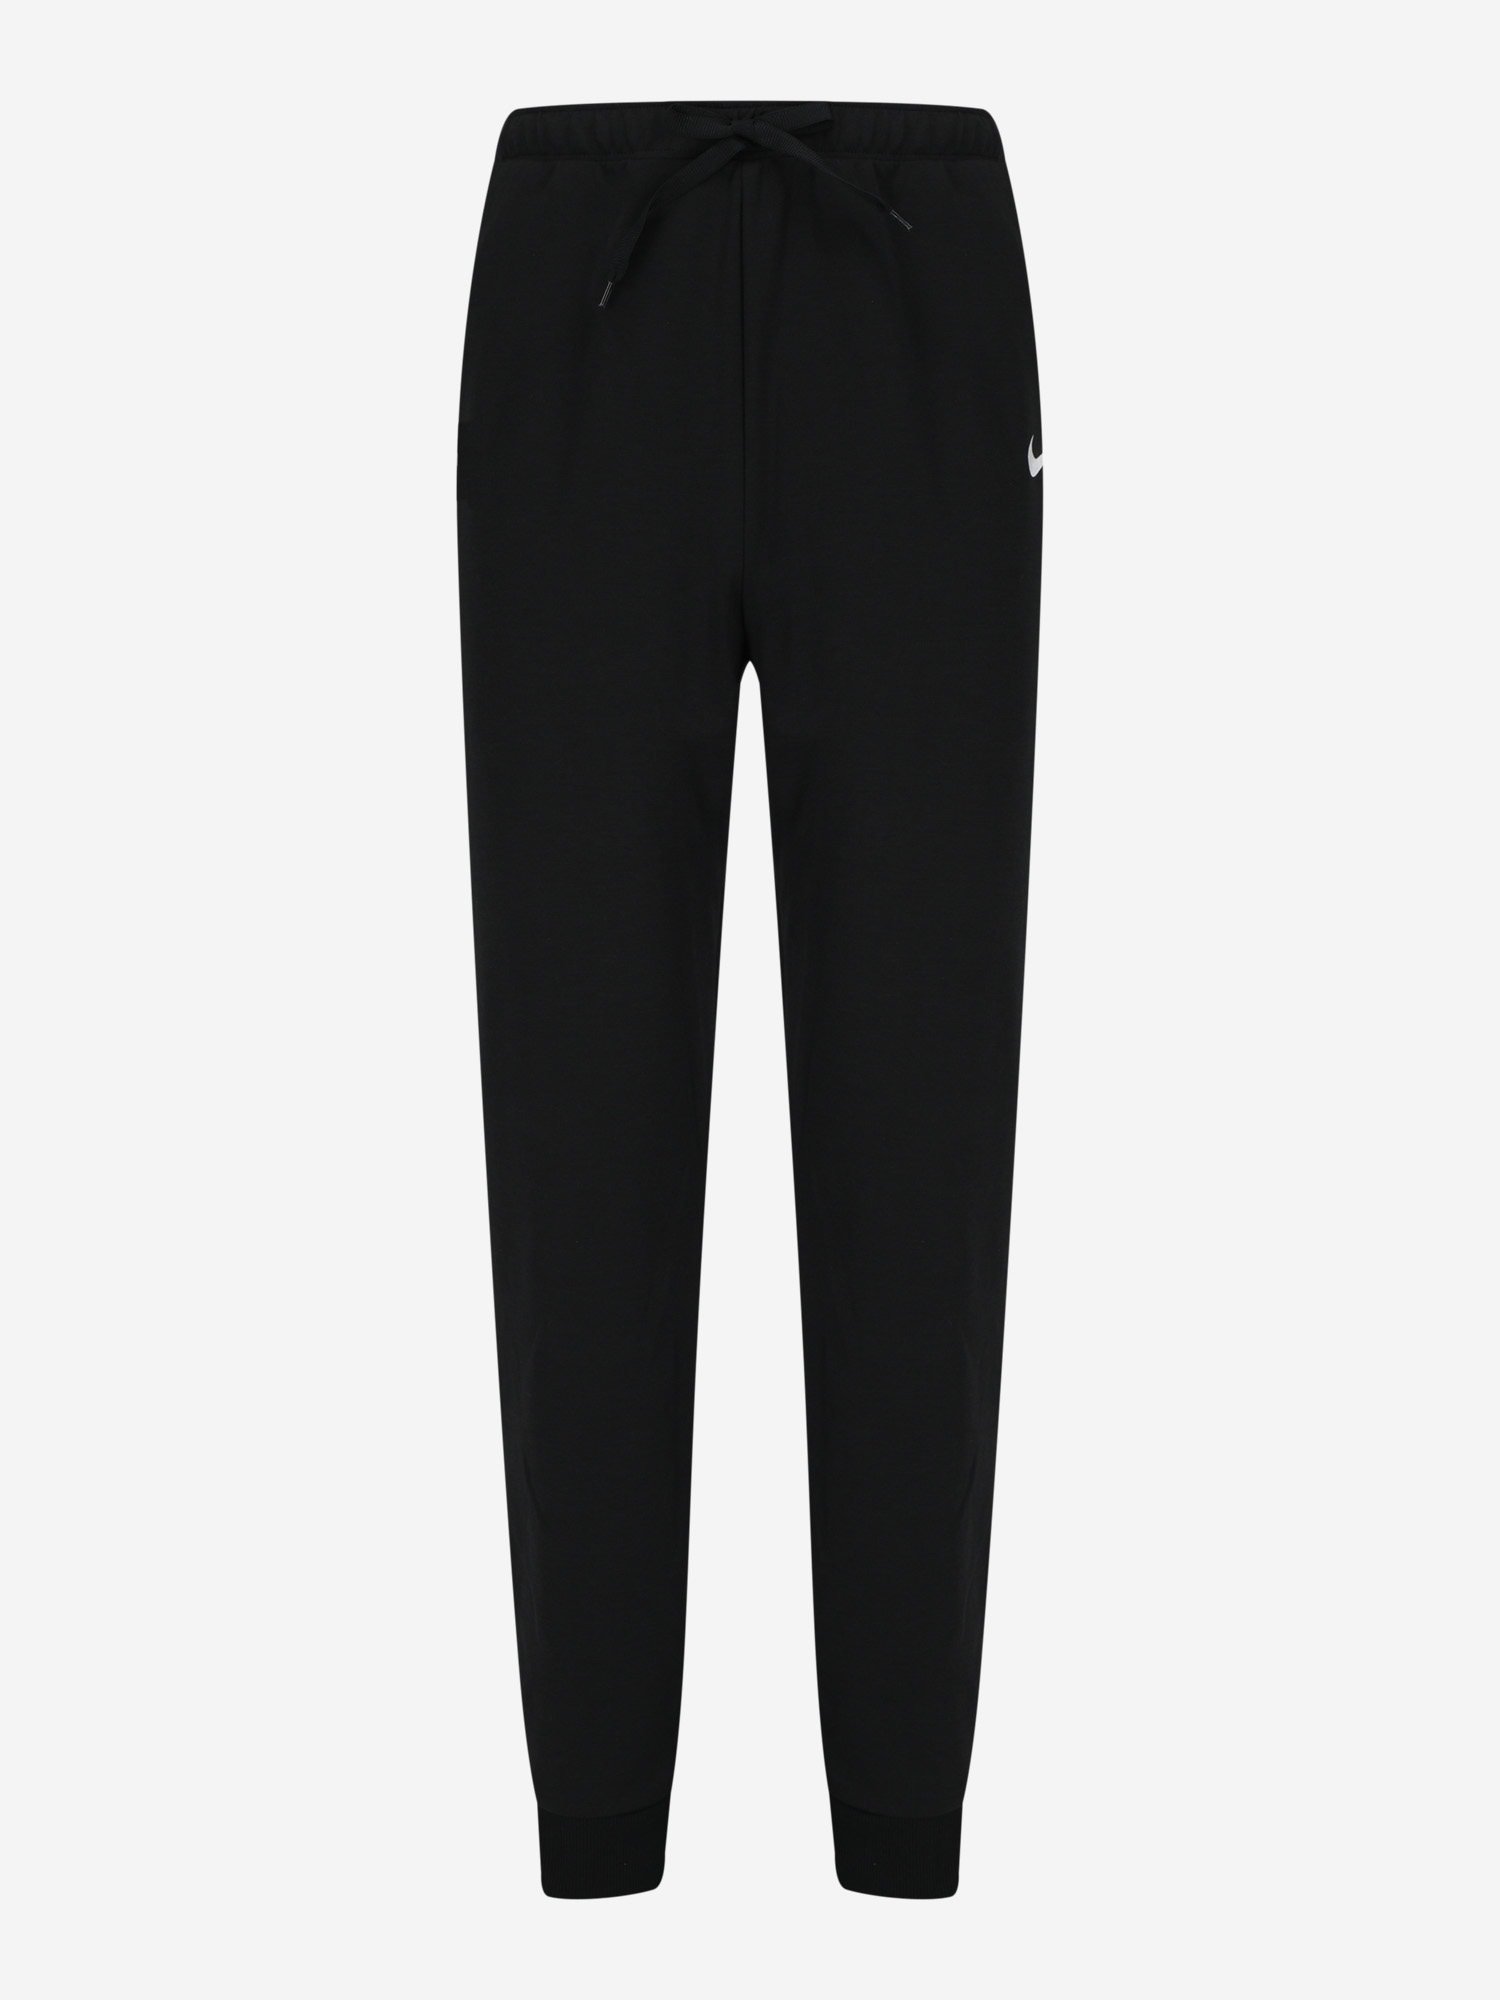 Брюки мужские Nike Training Pant Strike, Черный брюки для мальчиков nike kids training pant academy 21 мульти